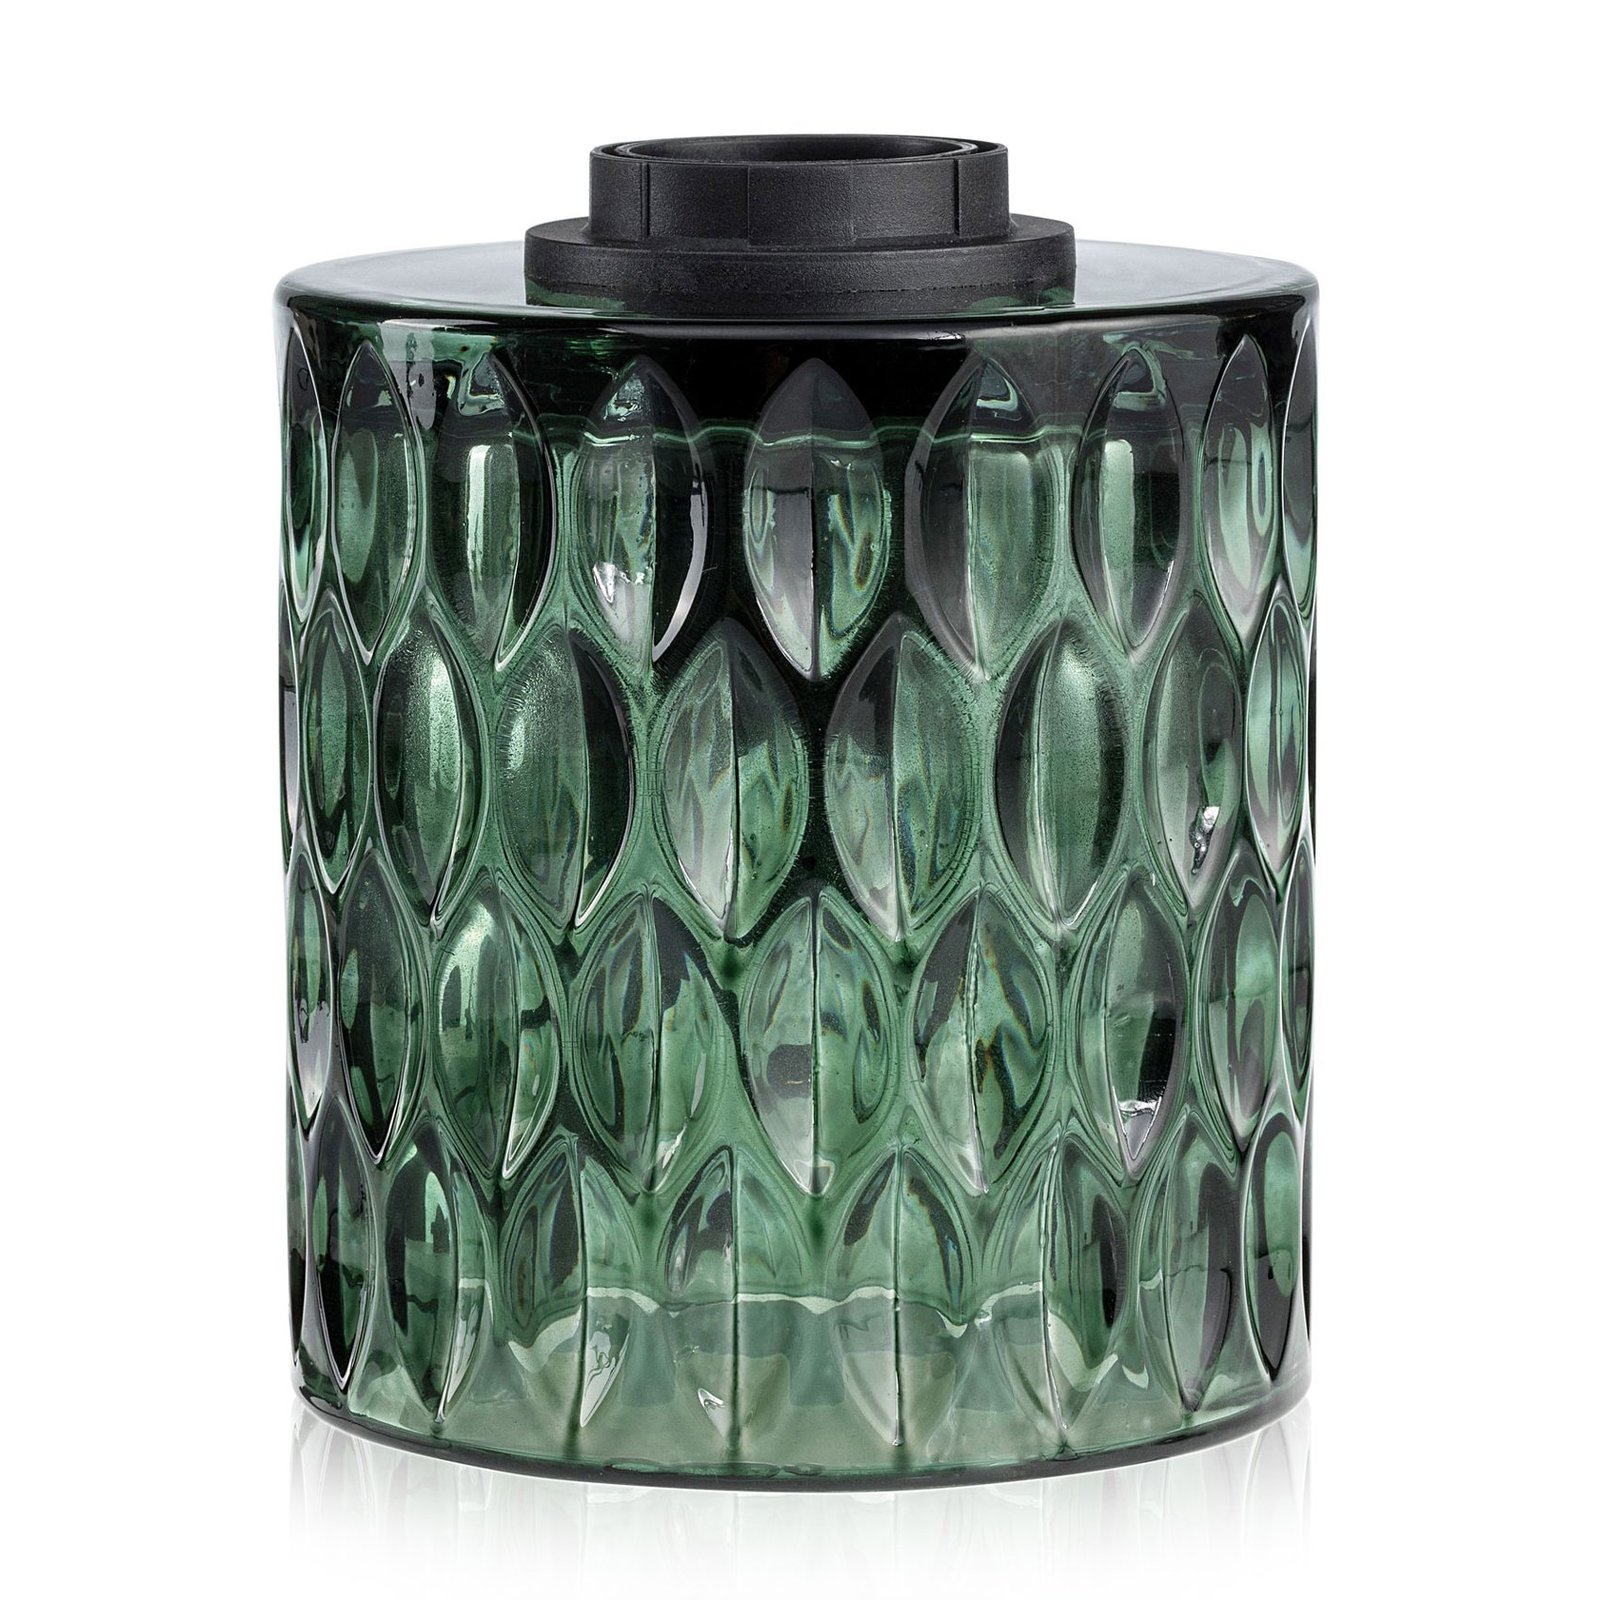 Pauleen Crystal Magic stolová lampa, zelené sklo